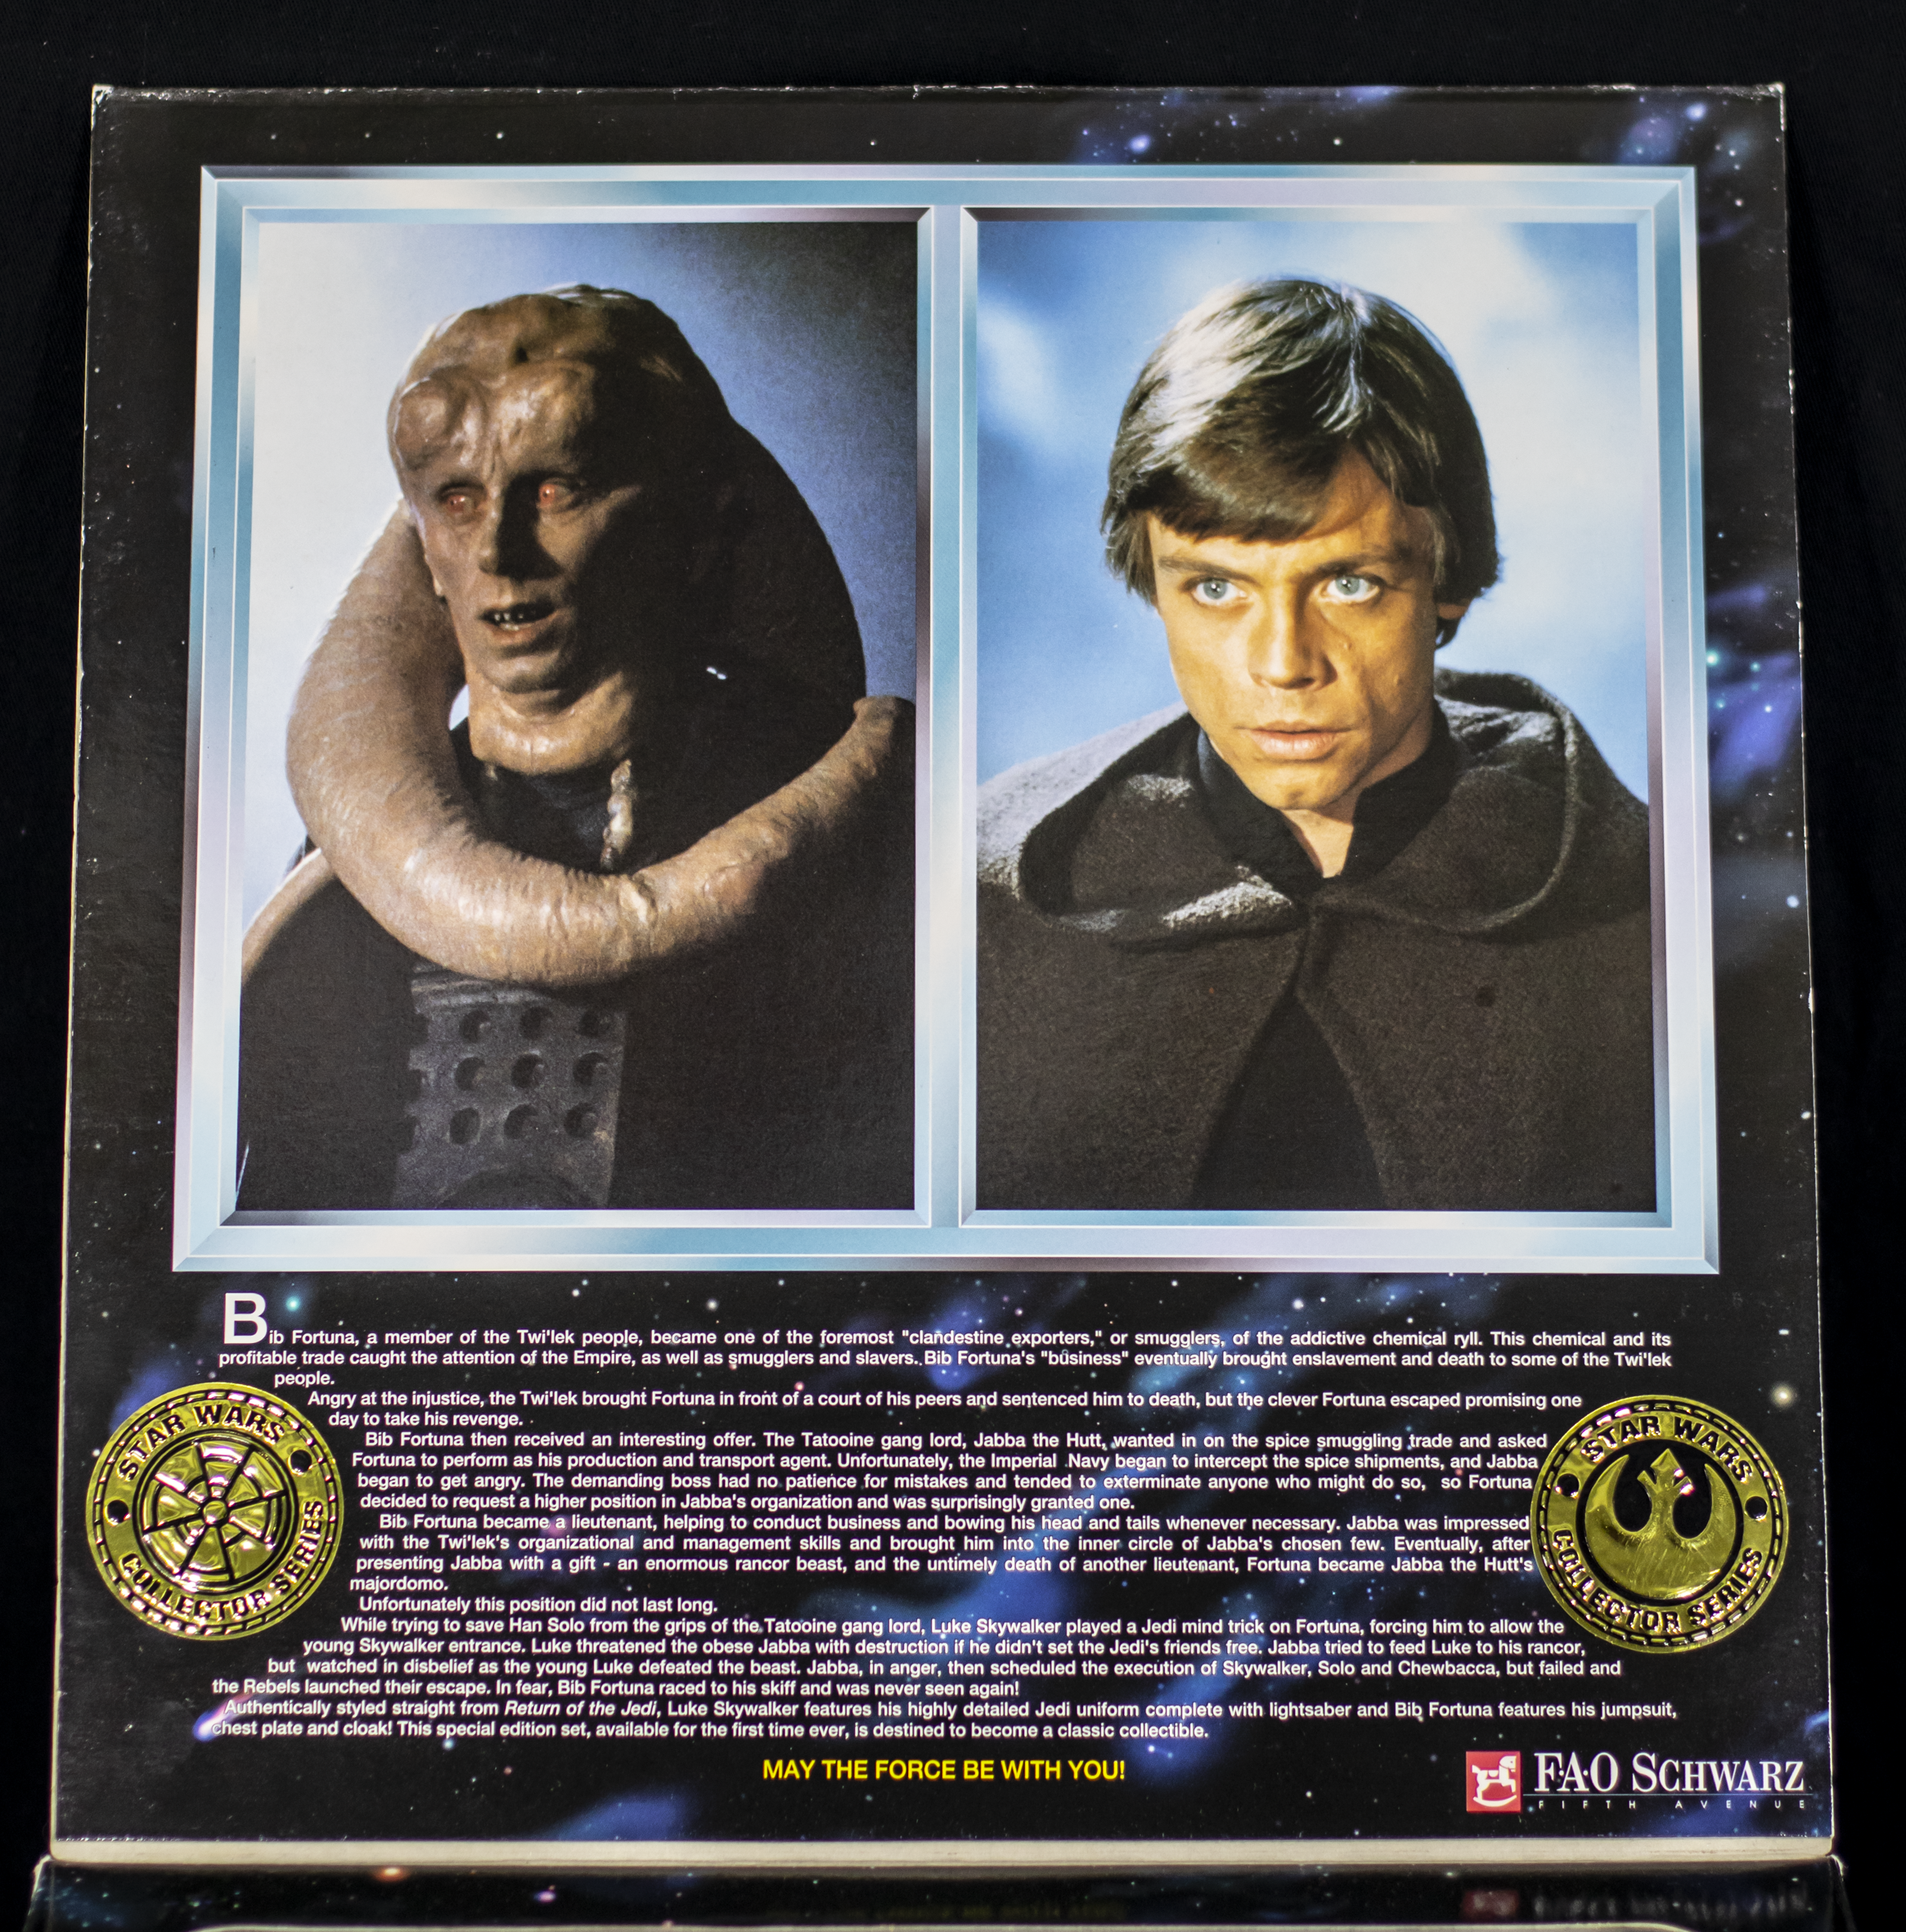 Star Wars: Collector Series "Jedi Luke Skywalker & Bib Fortuna"